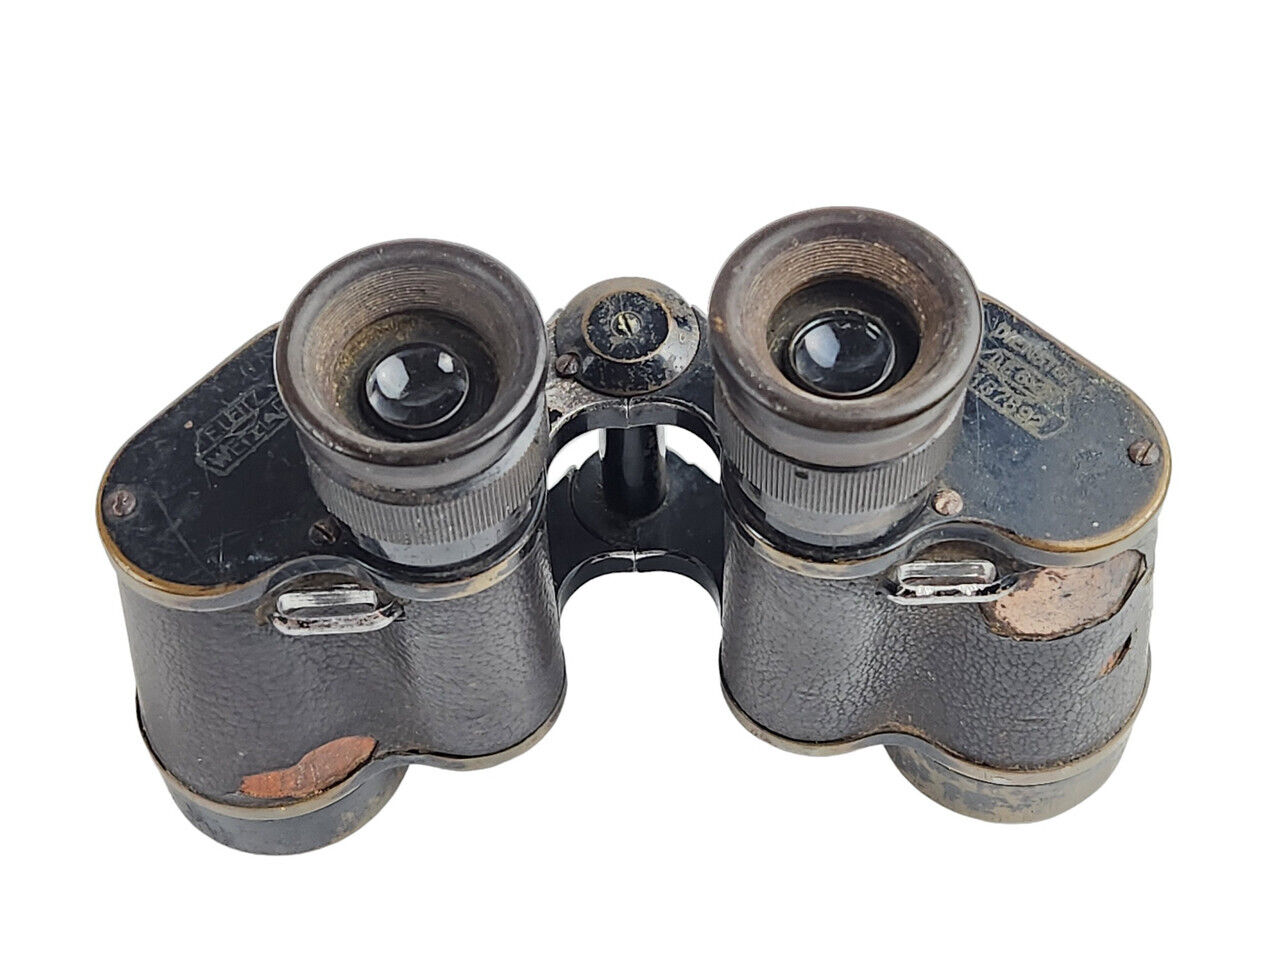 Prewar German Military Binoculars